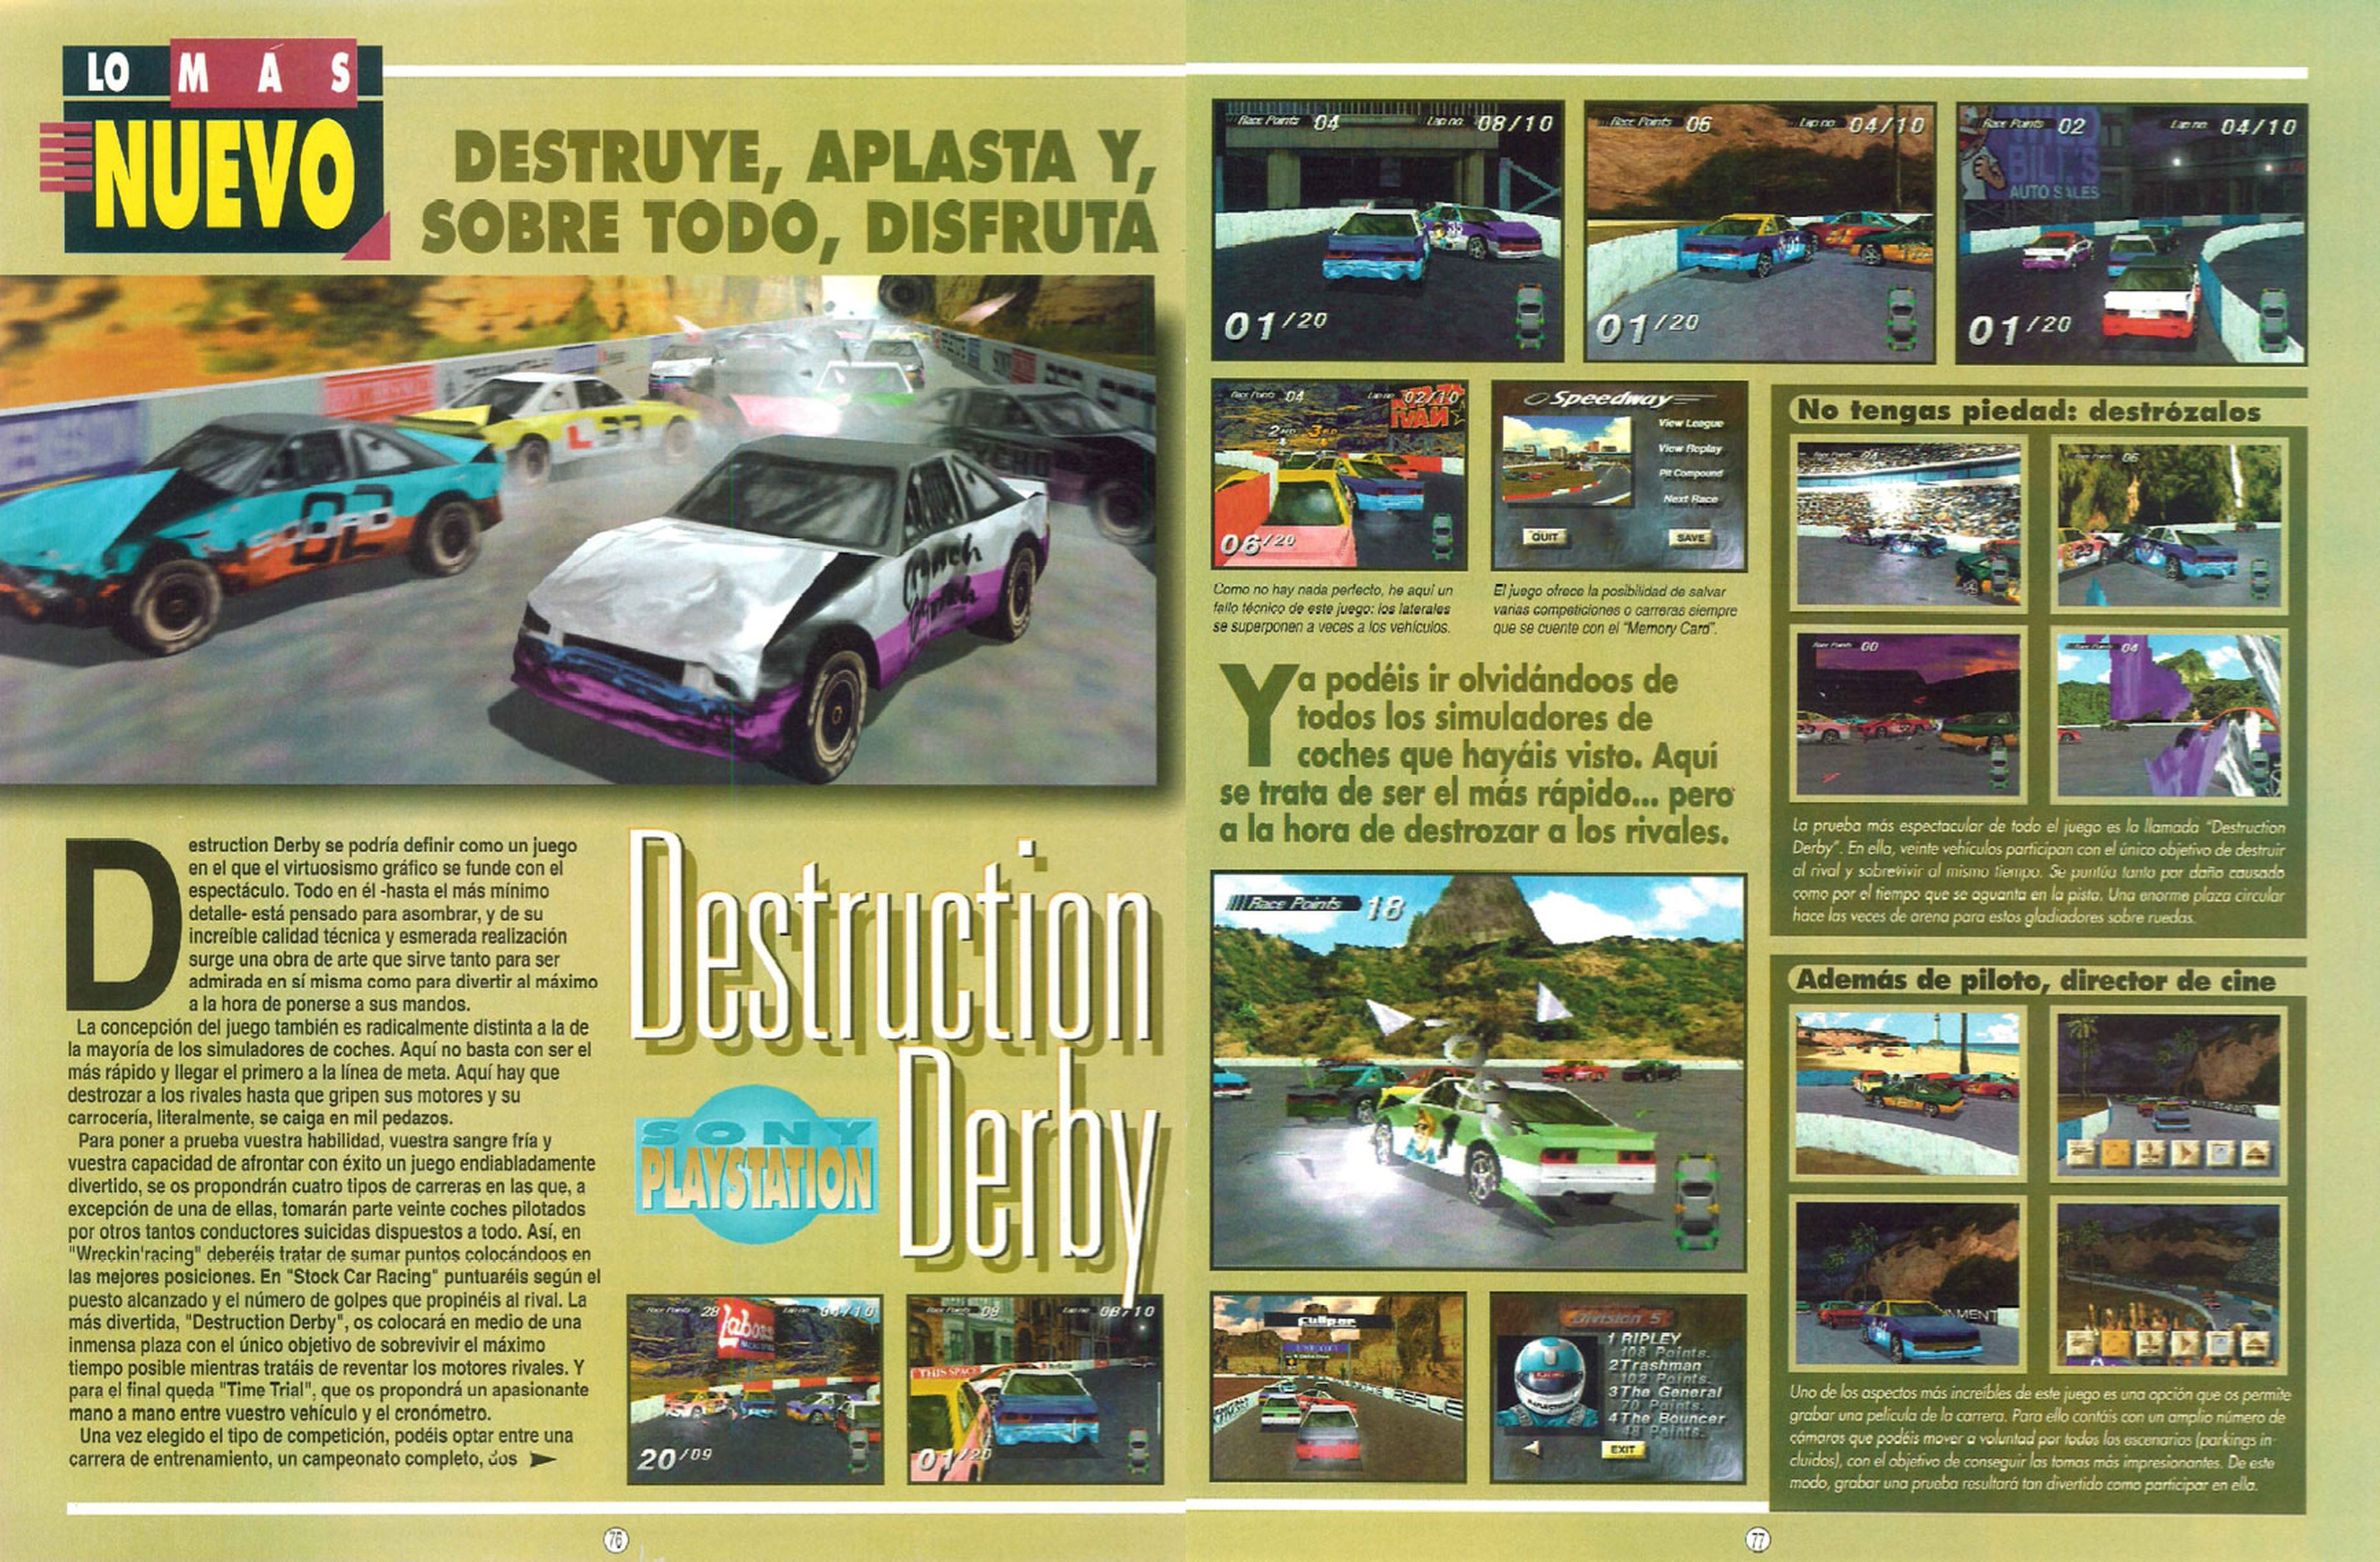 Análiis Destruction Derby Hobby Consolas 50